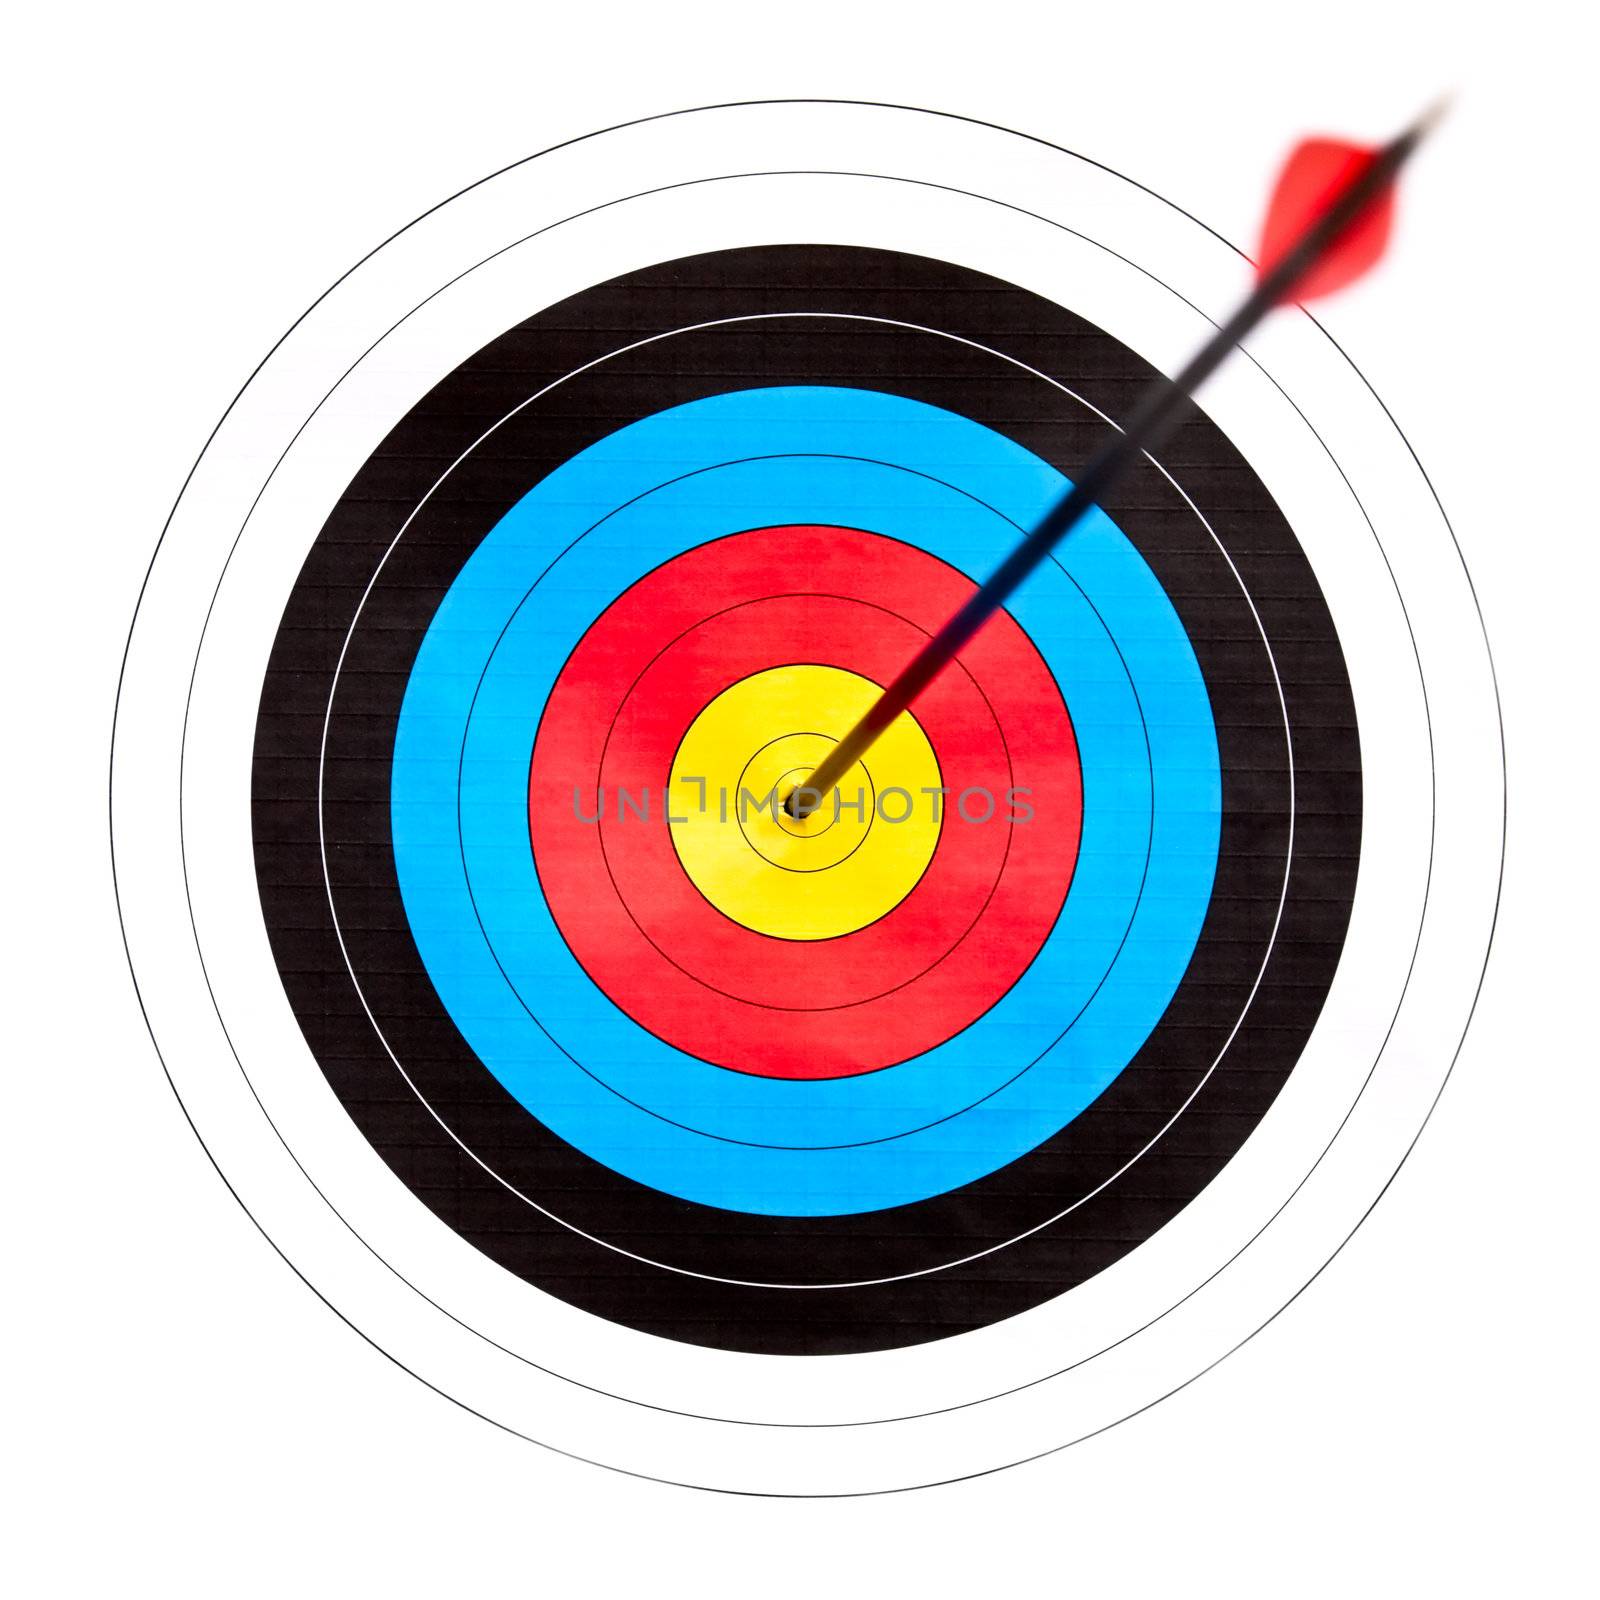 Target archery by naumoid